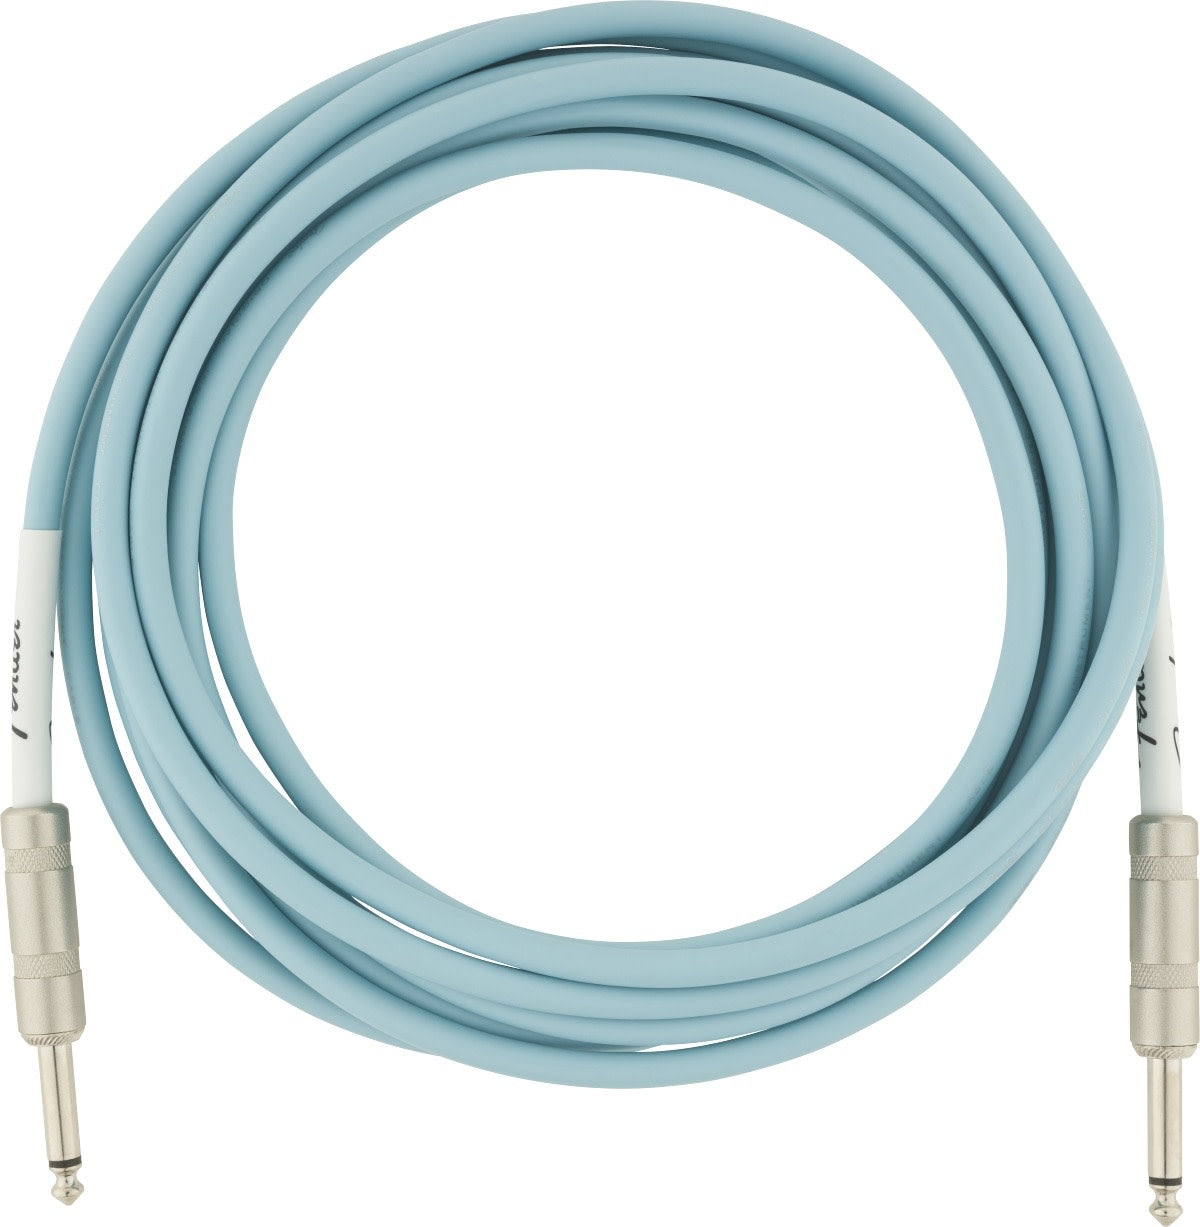 Original Series Instrument Cable, 10', Daphne Blue